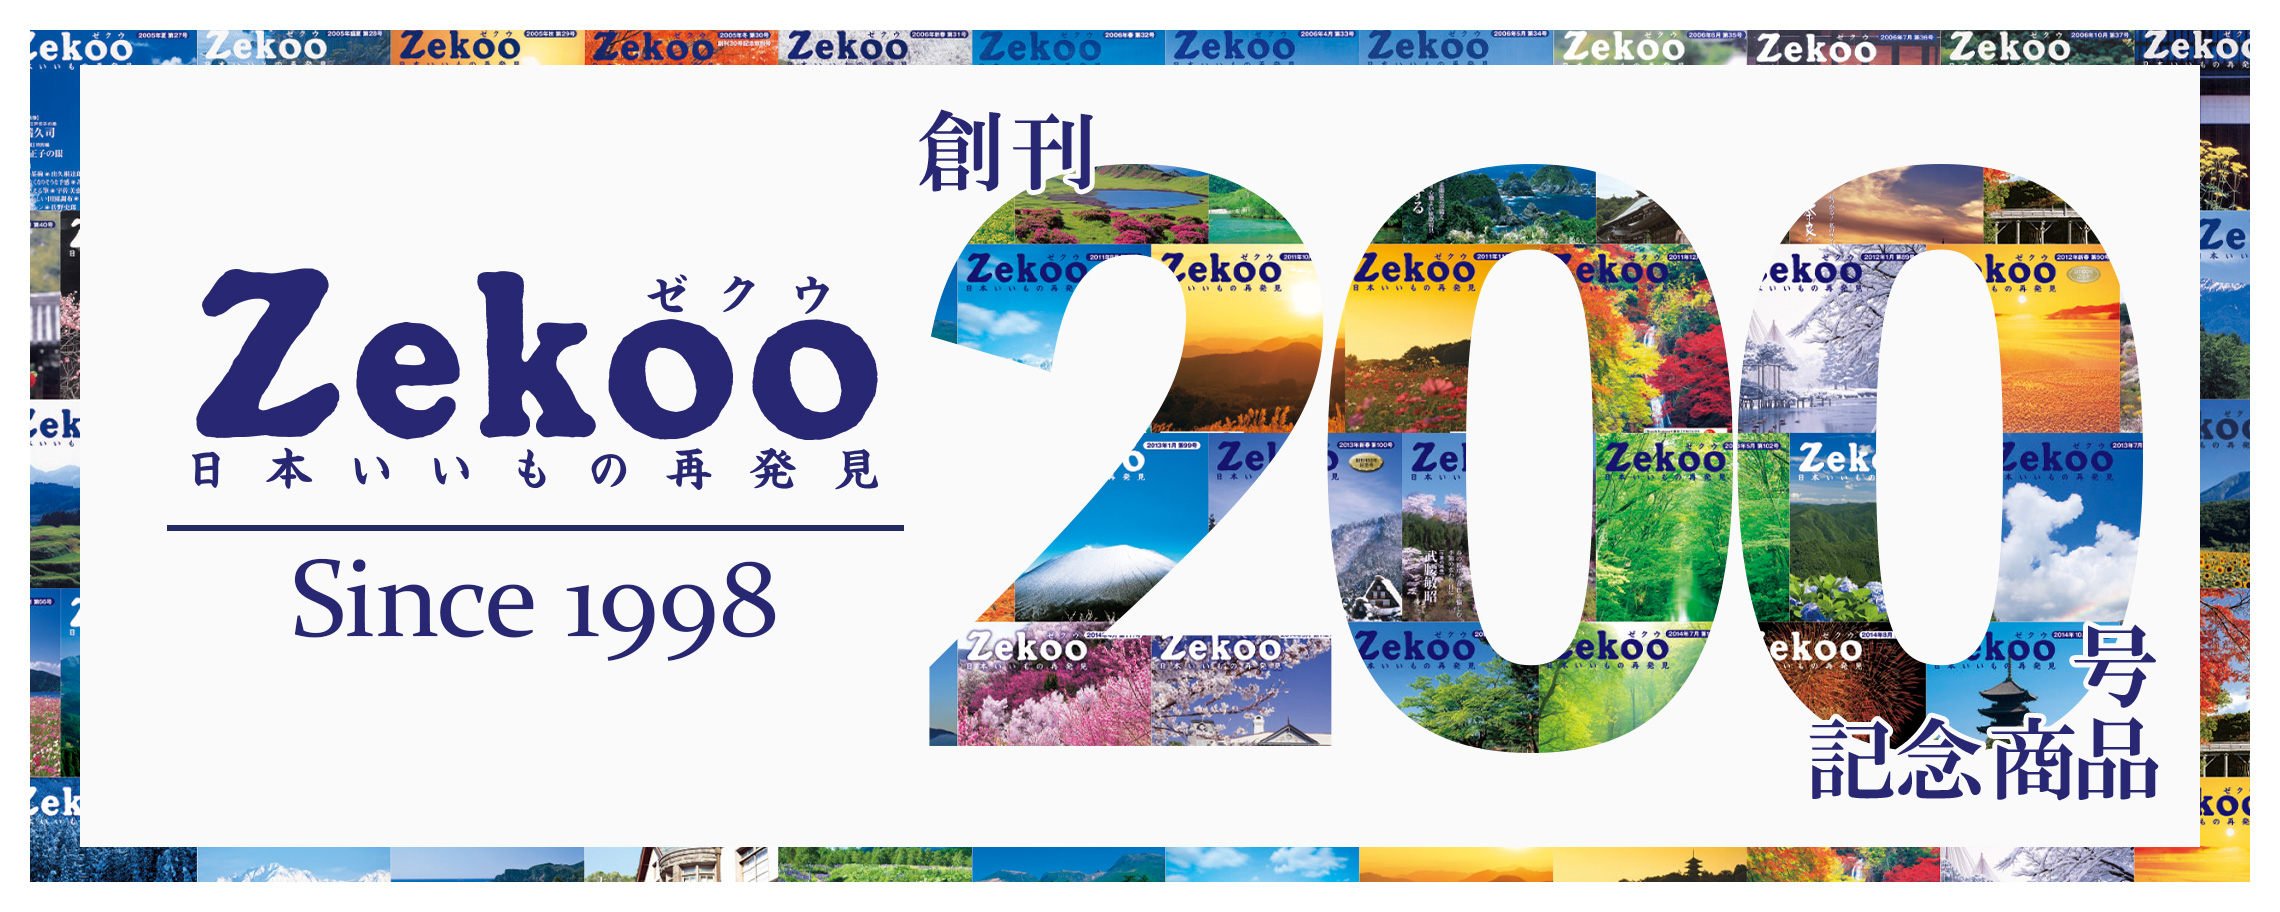 zekoo vol200 product